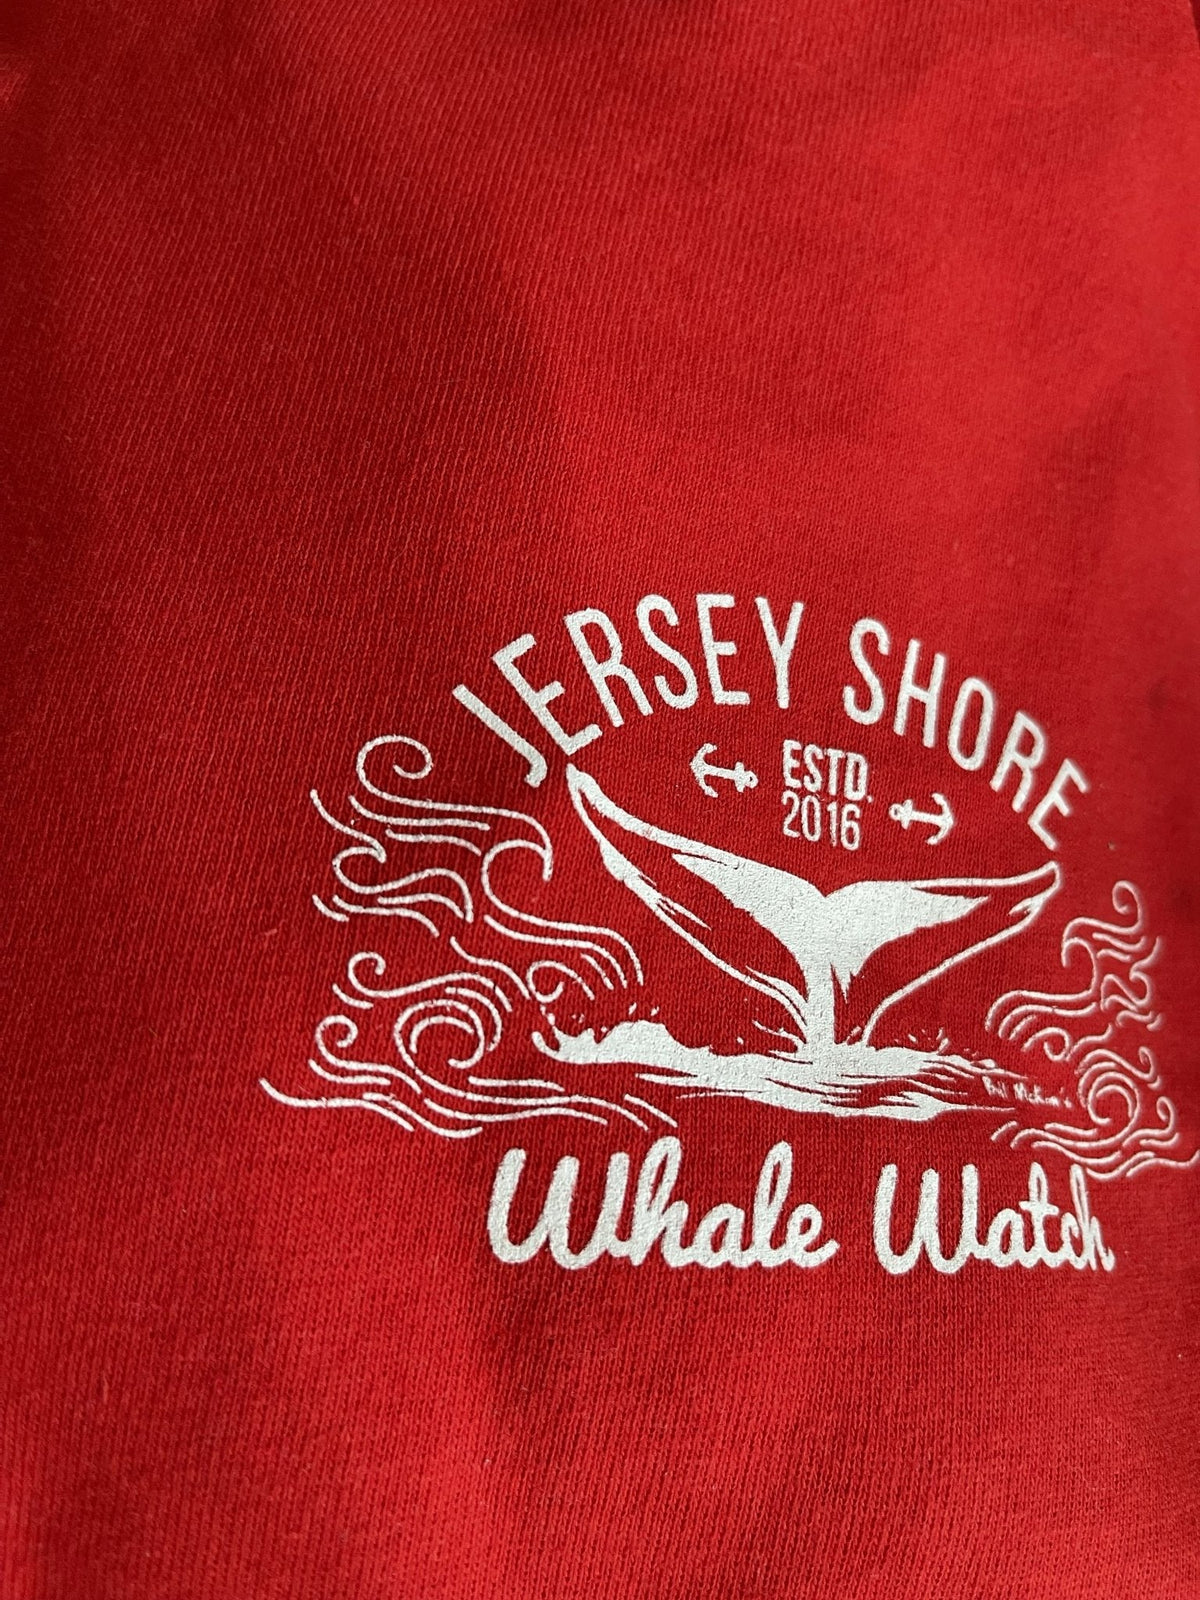 Jersey Shore Whale Watch Tshirt Amazing Quality Preshrunk Bill McKim Photography 5XL RED LONG SLEEVE 